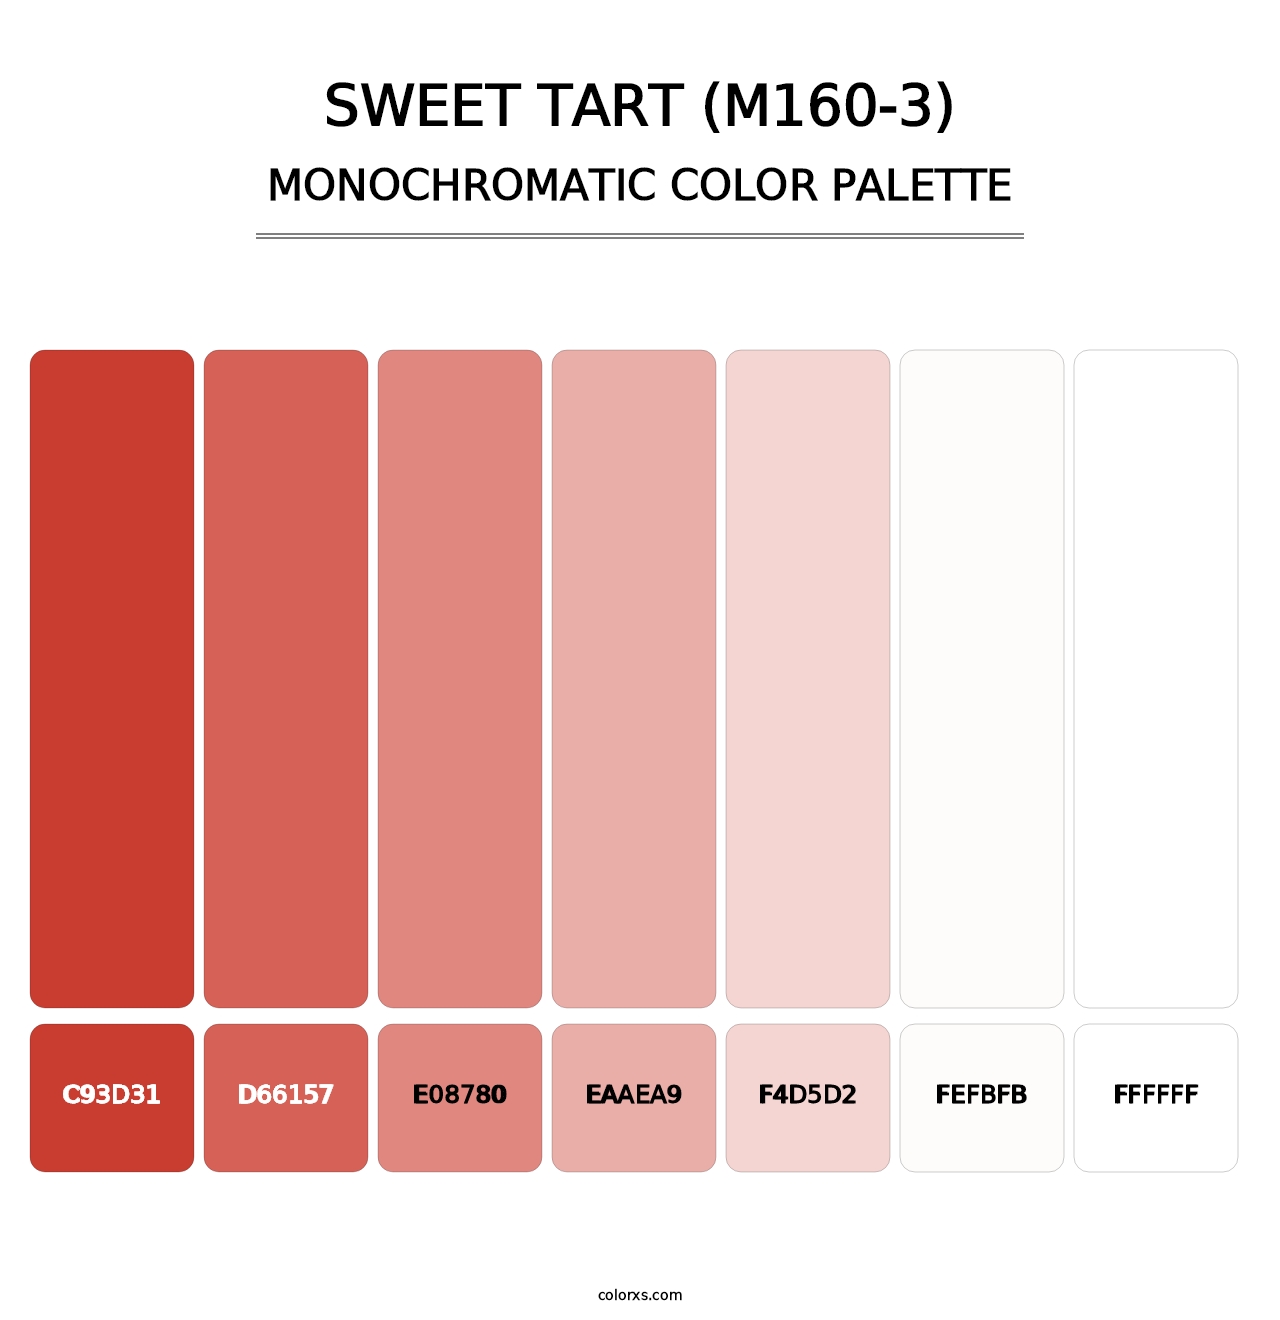 Sweet Tart (M160-3) - Monochromatic Color Palette